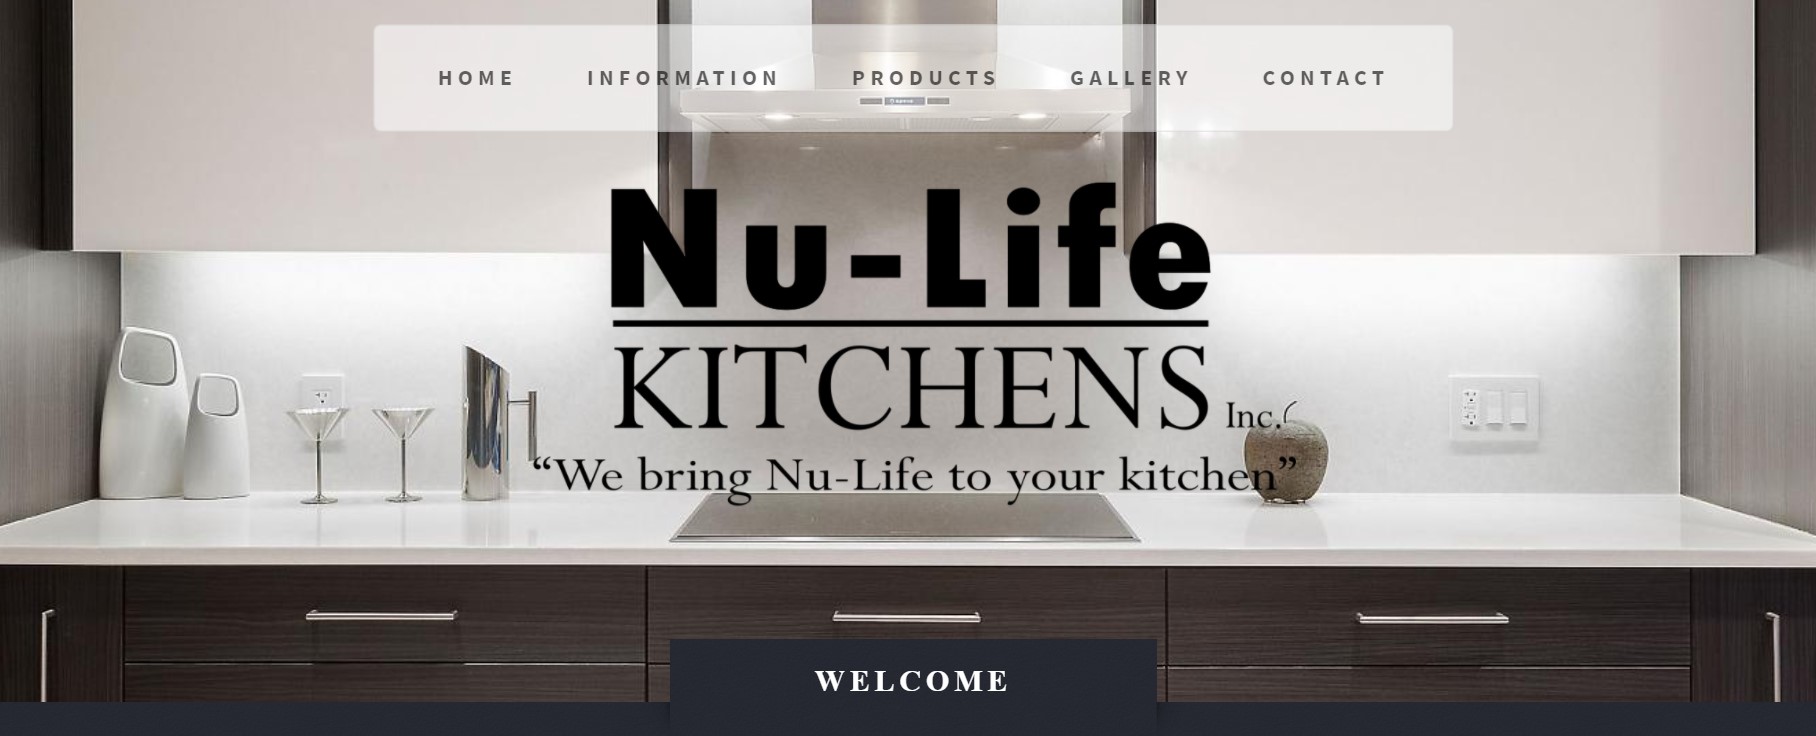 nu-life kitchen remodeler in winnipeg